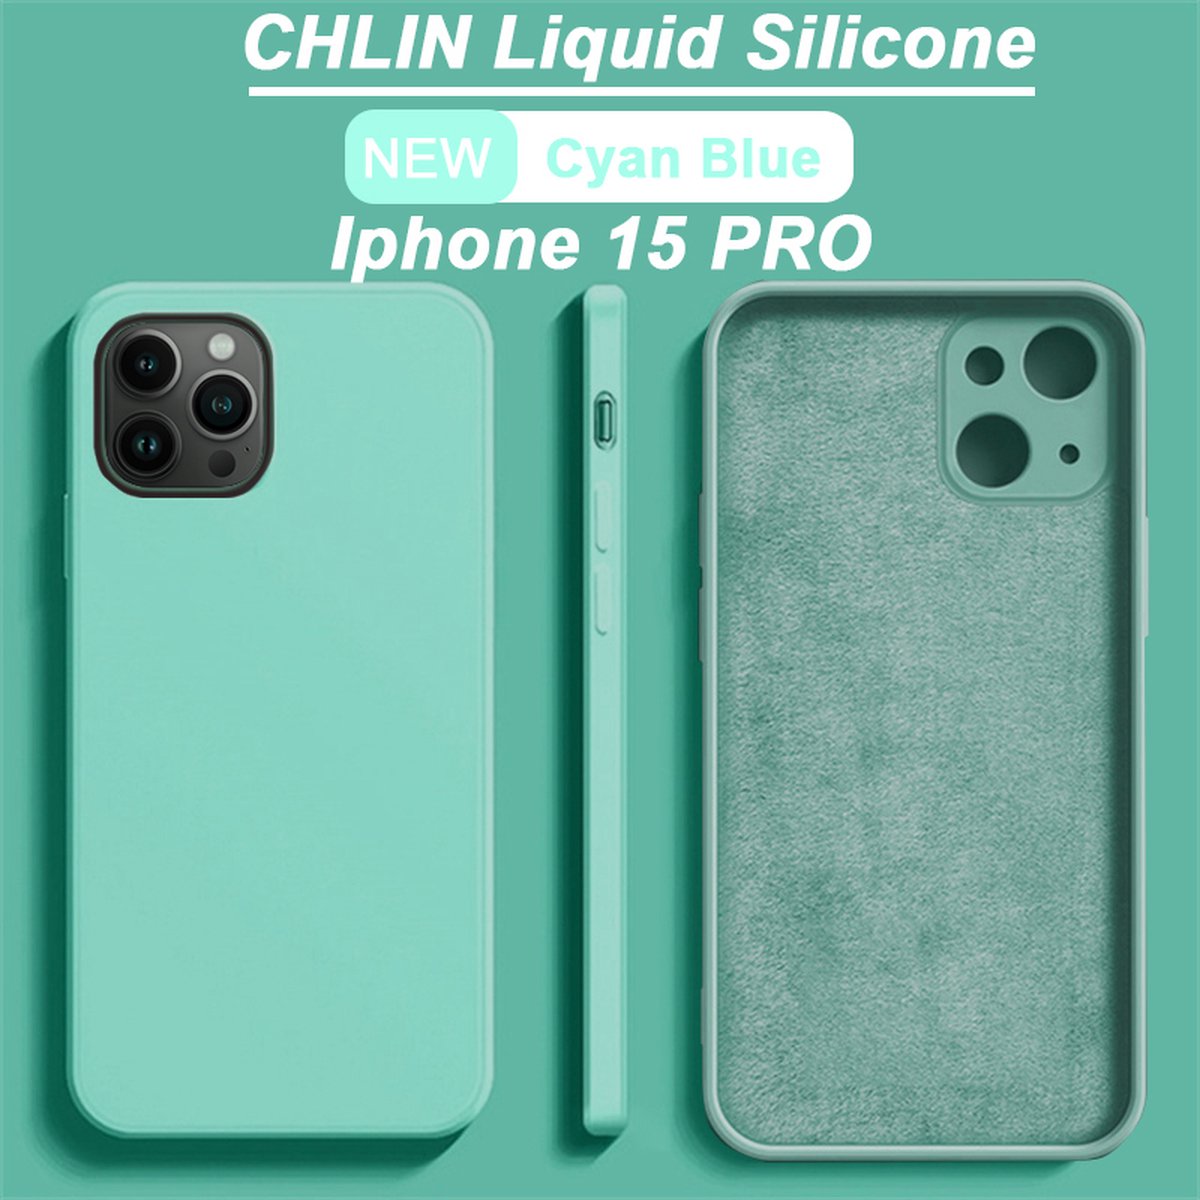 CL CHLIN® Premium Siliconen Case iPhone 15 Pro Blauw - iPhone 15 Pro hoesje - iPhone 15 Pro case - iPhone 15 Pro hoes - Silicone hoesje - iPhone 15 Pro protection - iPhone 15 Pro protector.